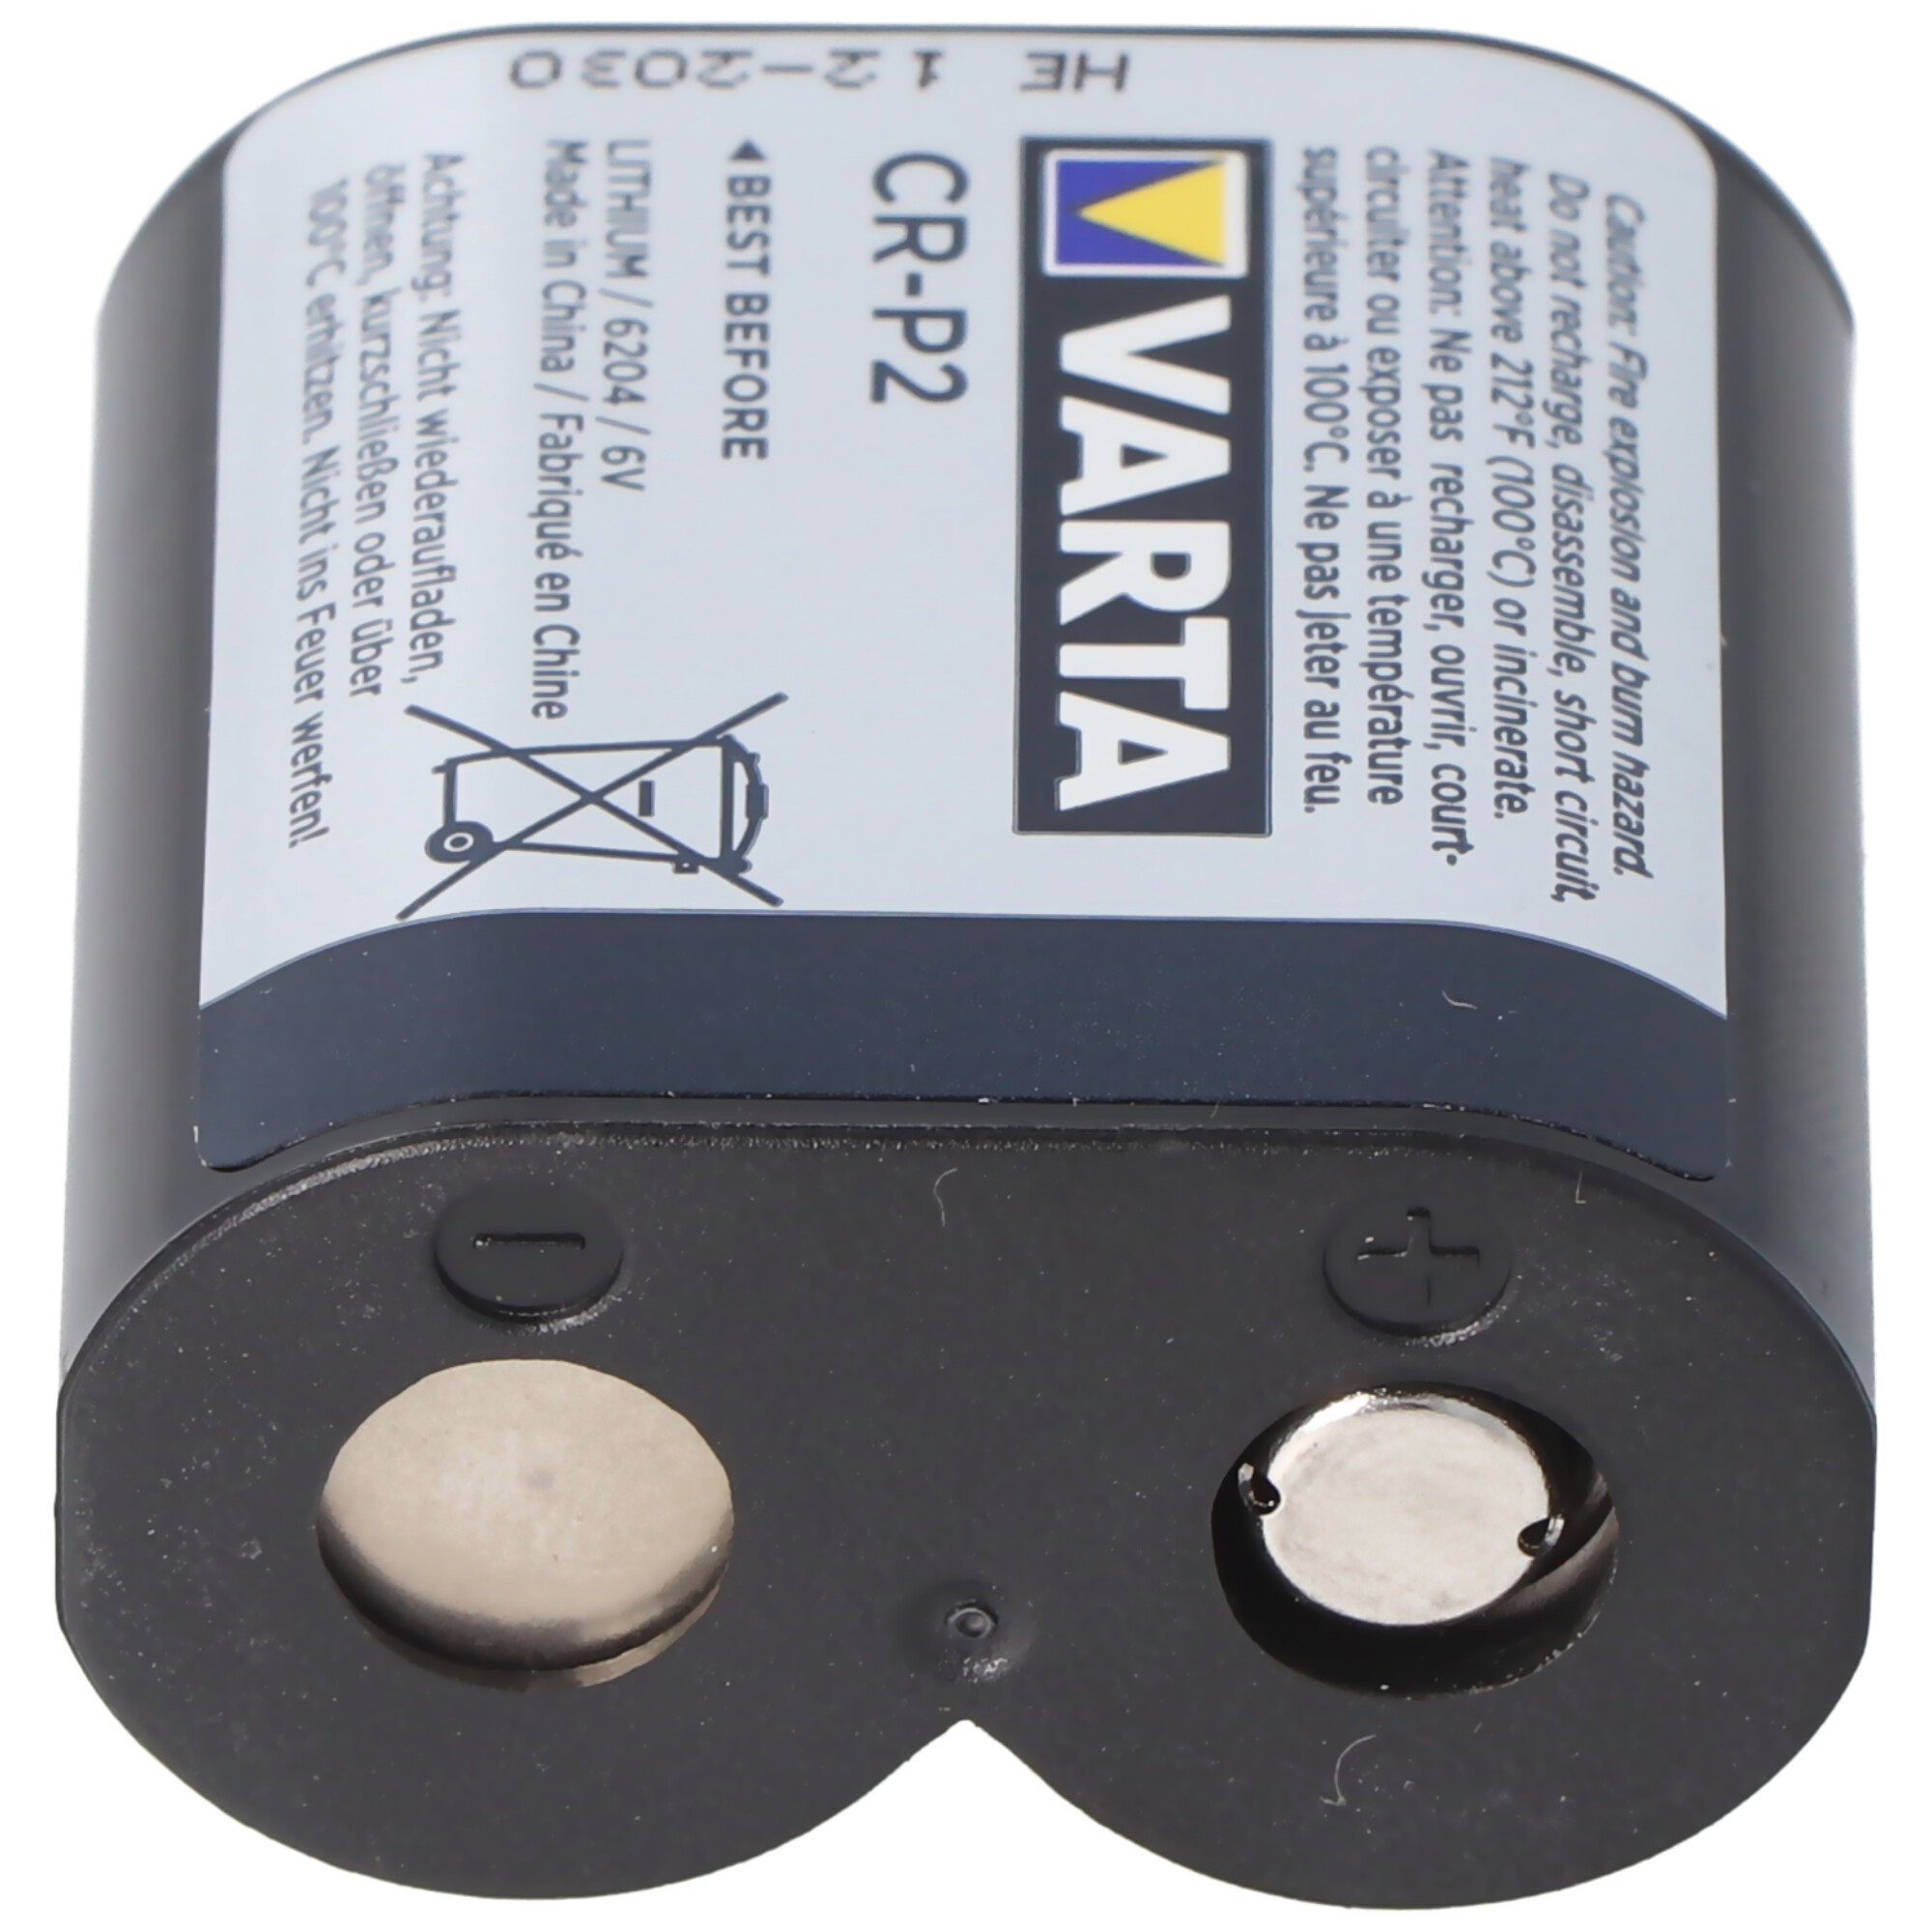 Varta CR-P2 6204 6 Volt Lithium Batterie